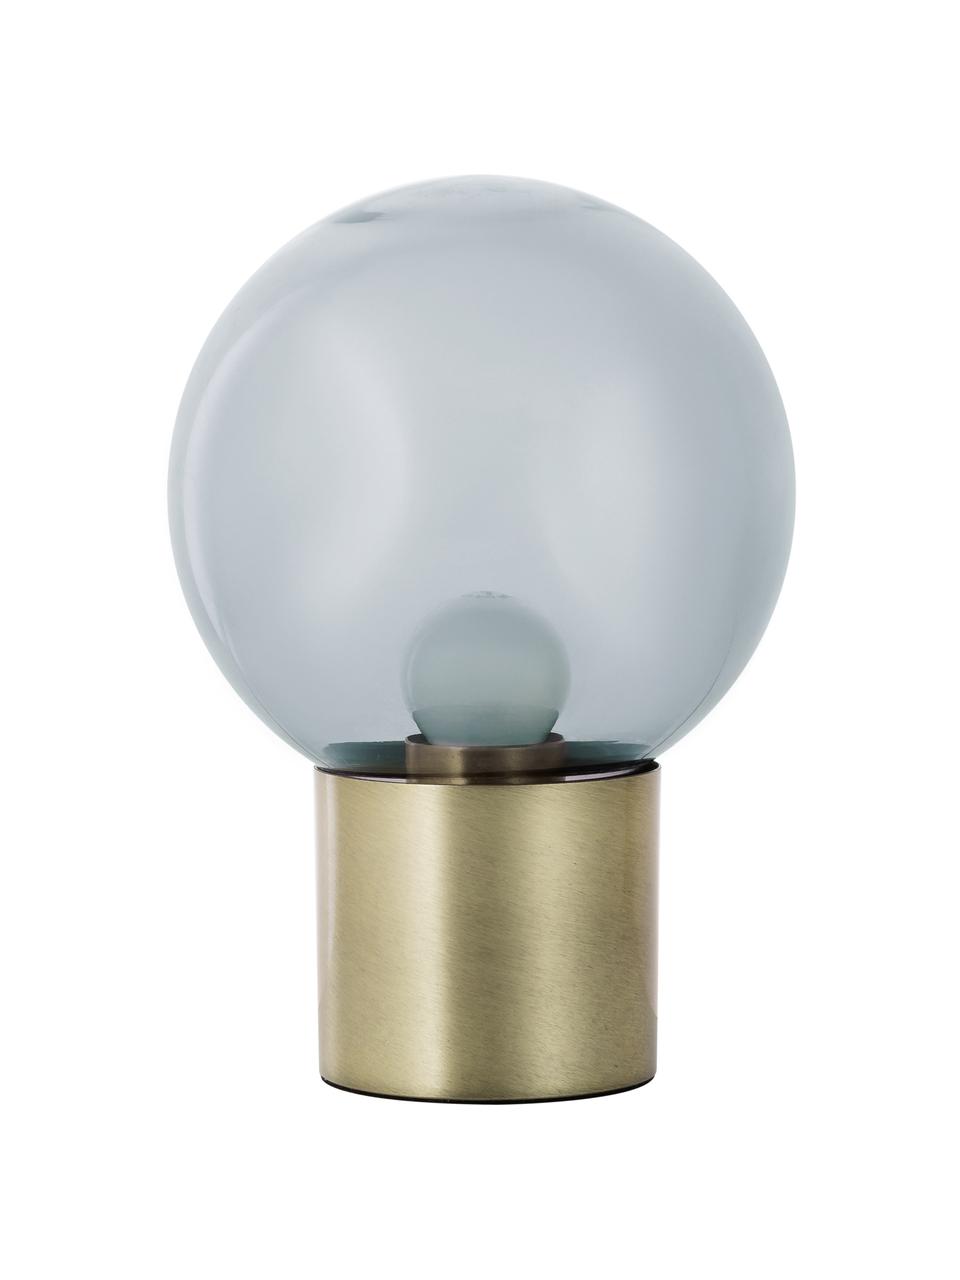 Kleine retro tafellamp Lark van glas, Lampenkap: glas, Lampvoet: geborsteld metaal, Lampenkap: grijs, transparant. Lampvoet: mat messingkleurig, Ø 17 x H 24 cm